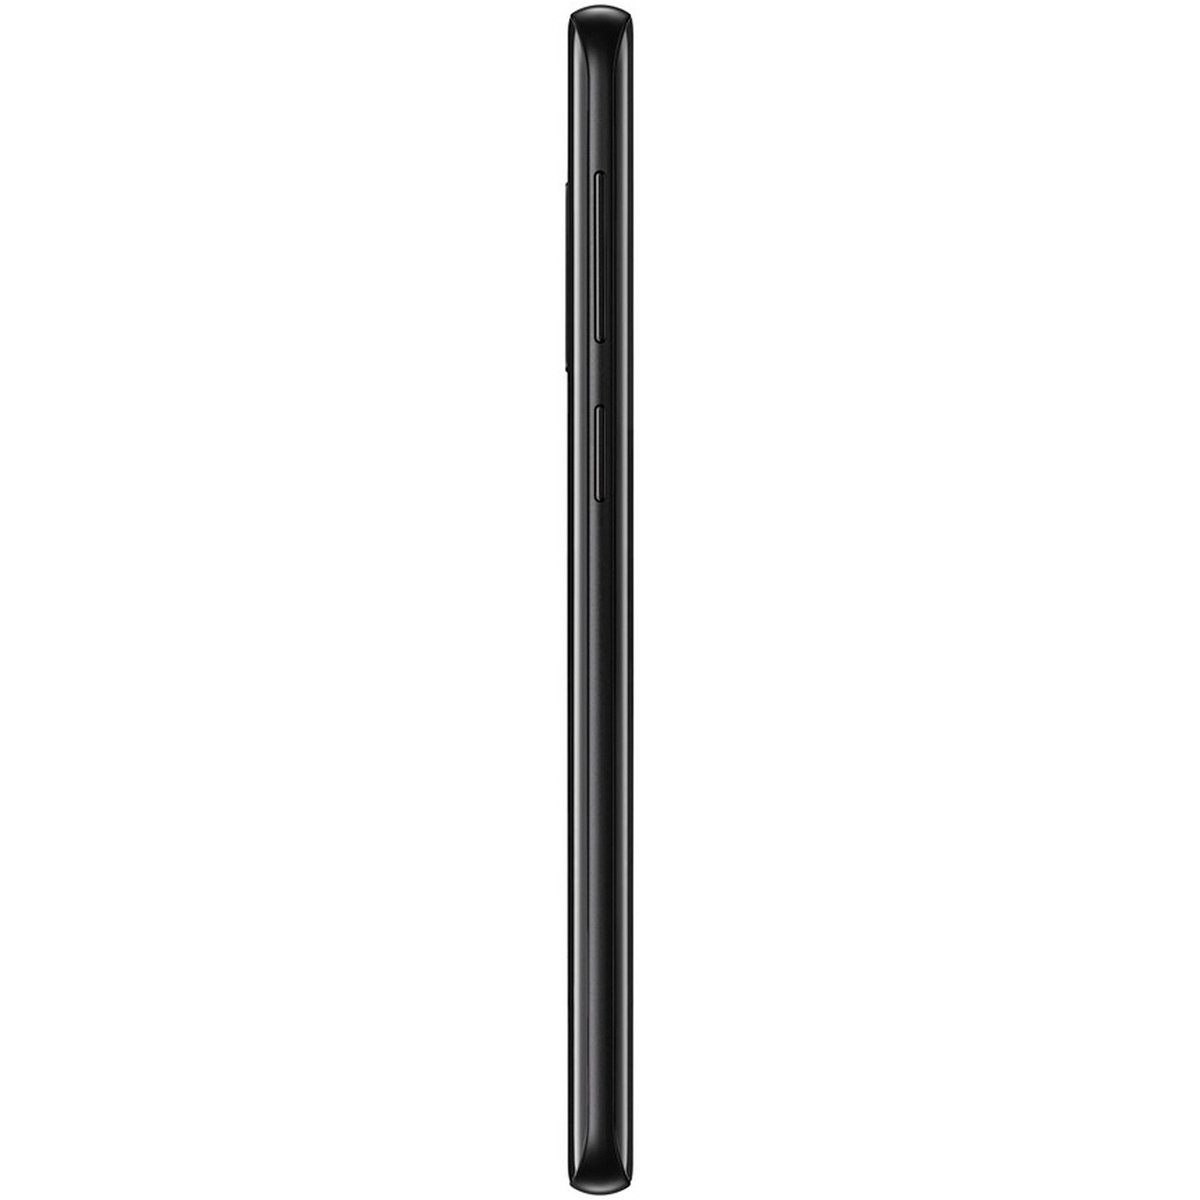 Samsung Galaxy S9 SM-G960FZKHXSG 256 GB Midnight Black